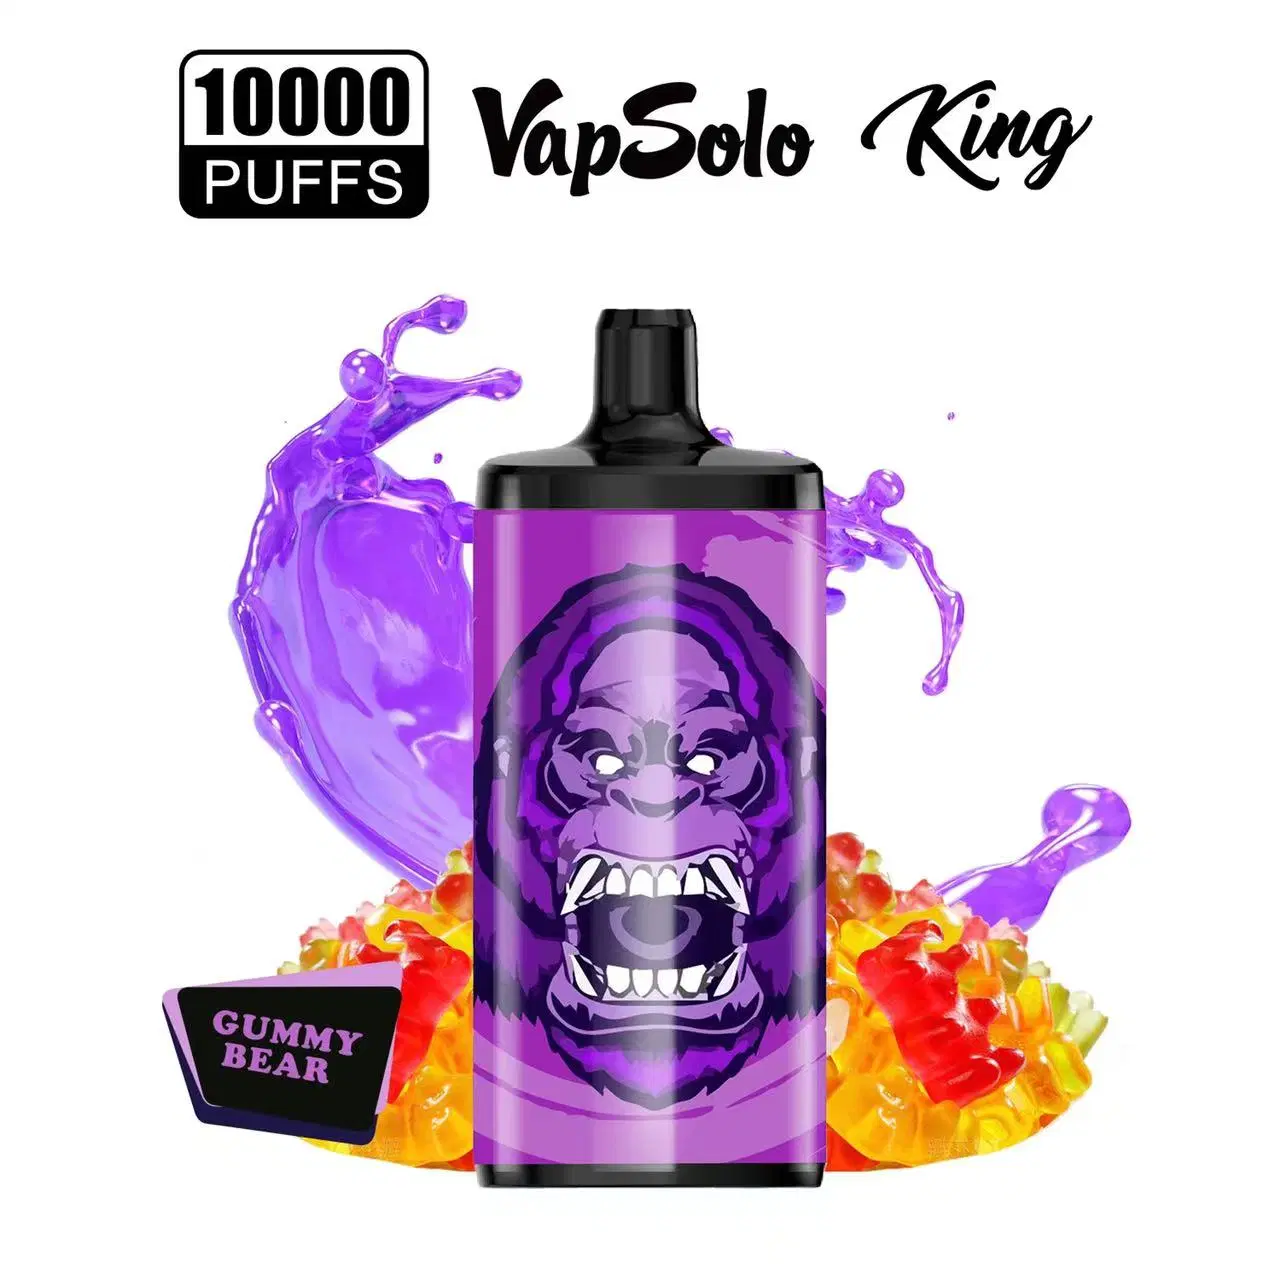 Factory Brand Vapsolo King Hookah Pen Puff 10000 Diffuser Pen Melatonin Vape Electronic Cigarette Filter Price